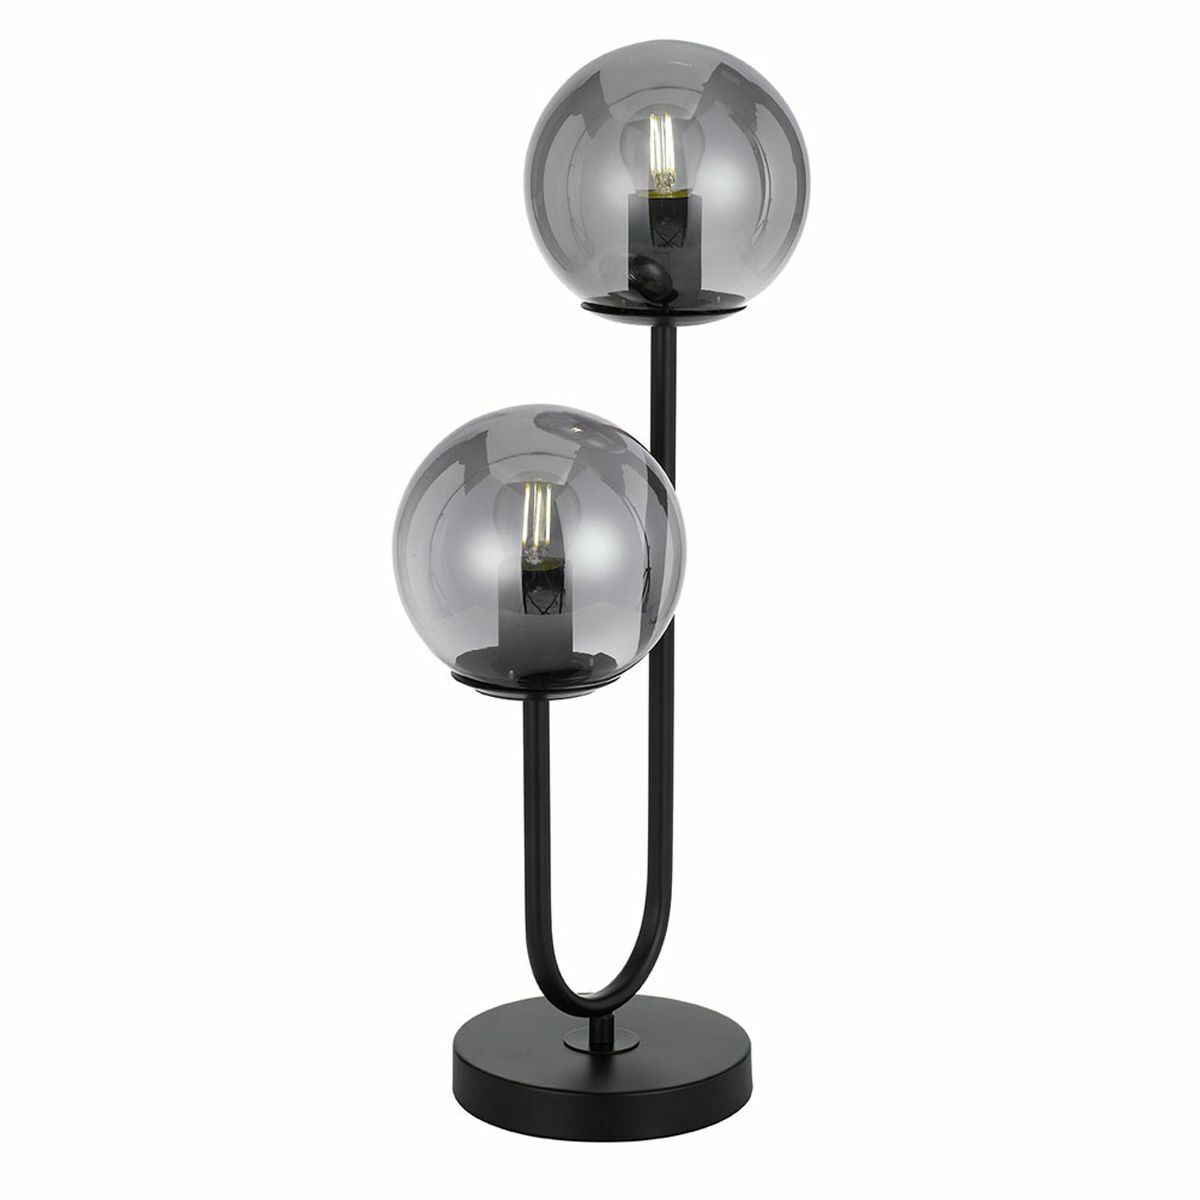 Eterna 2 Light Retro Table Lamp